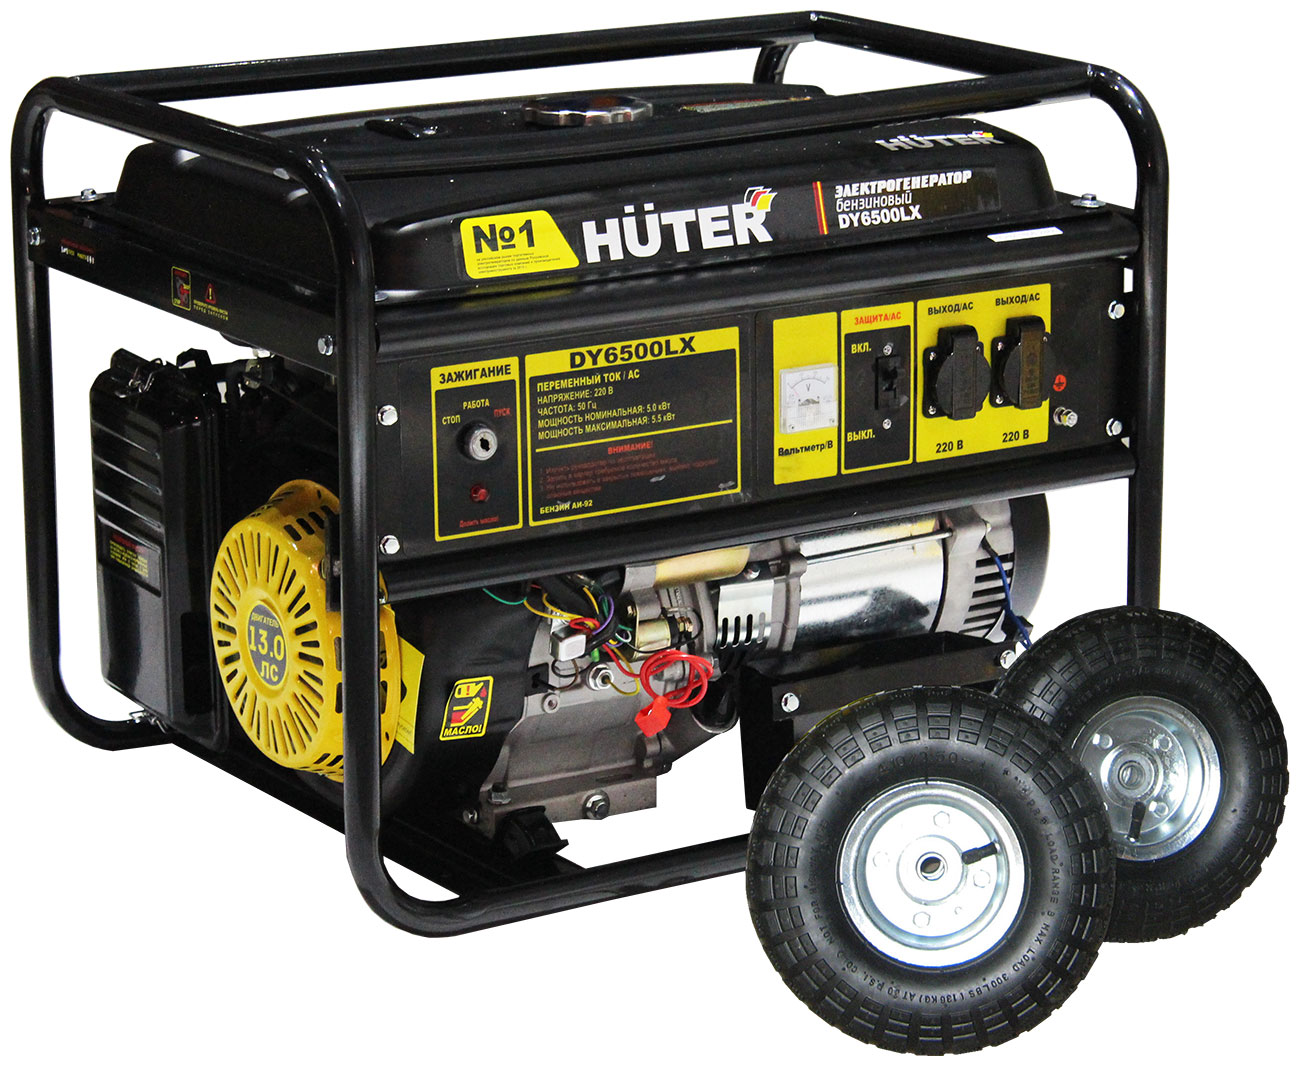 Электрический генератор и электростанция Huter DY6500LX с колёсами и акуумулятором цена и фото